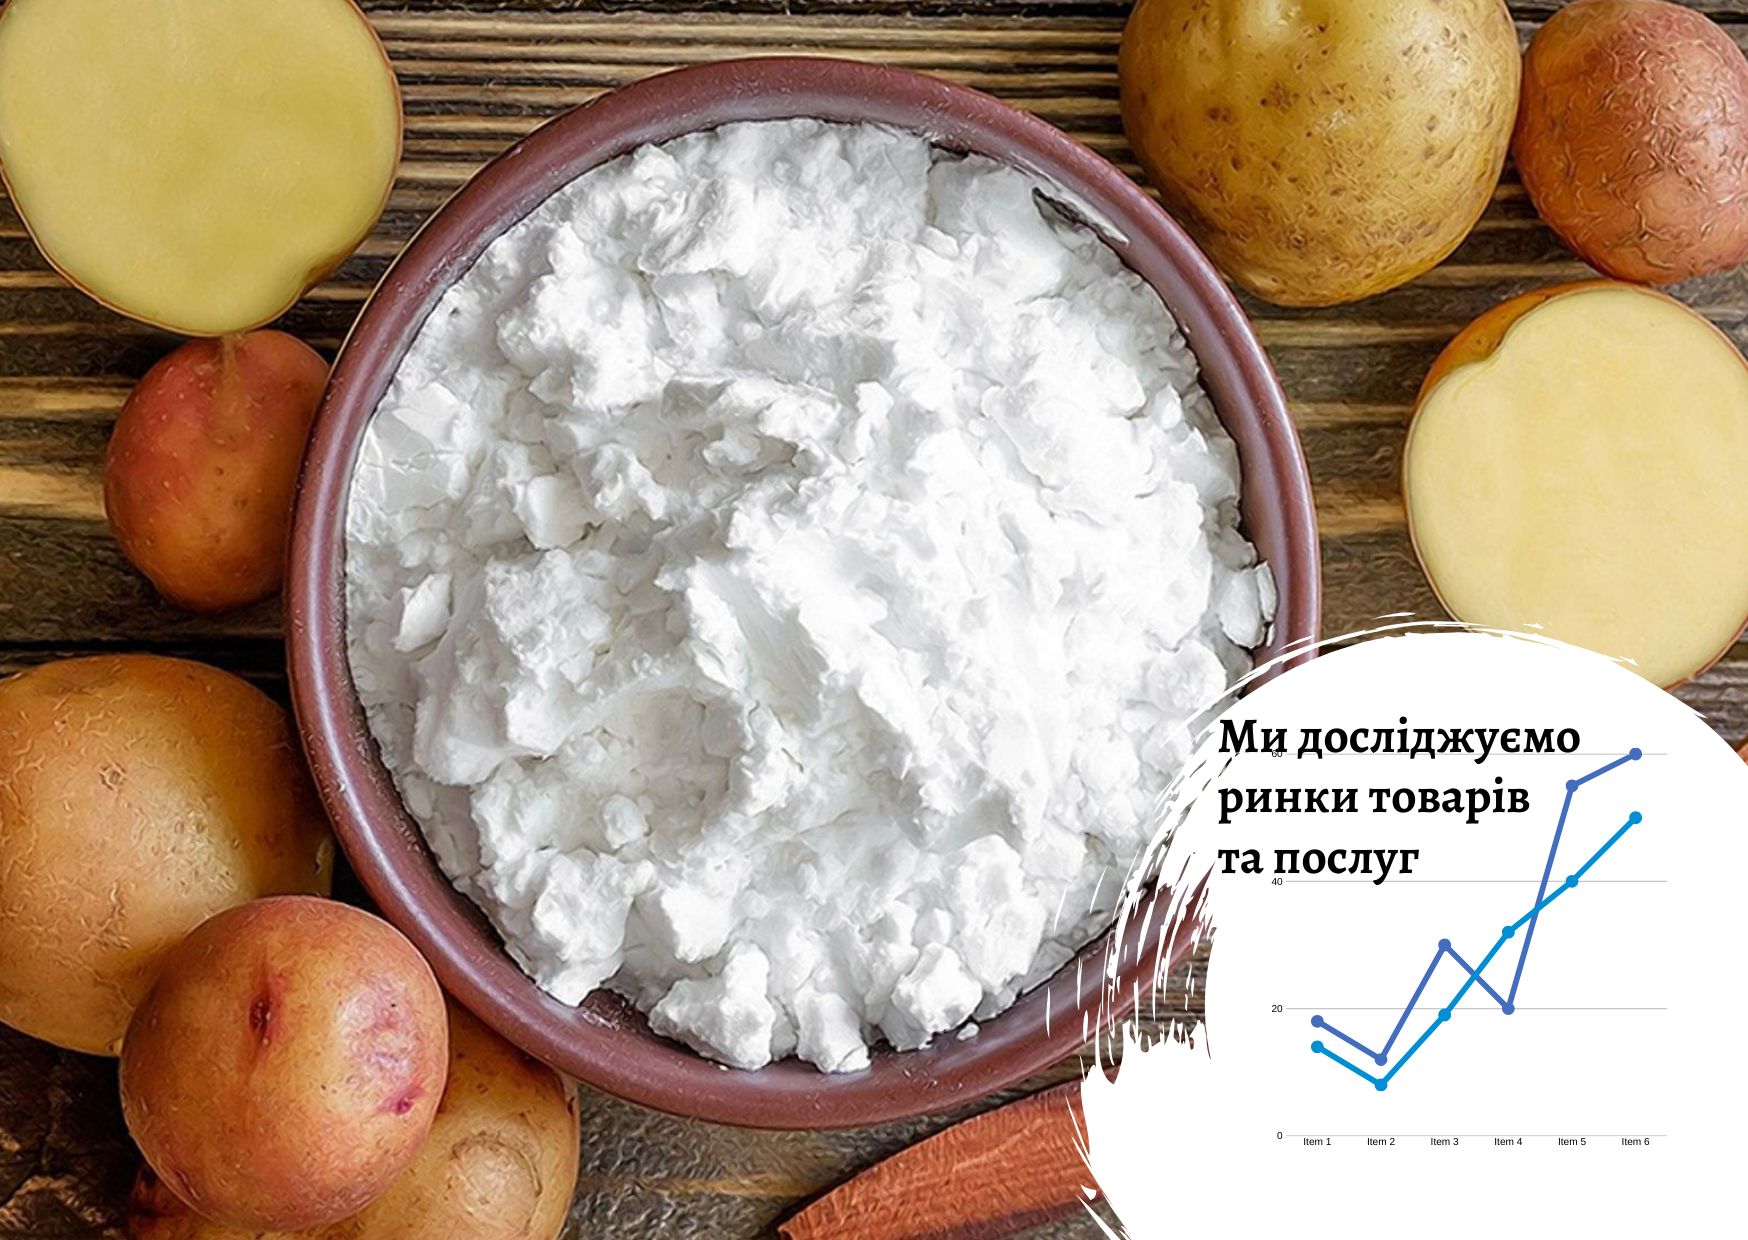 Ukrainian starch market: trends